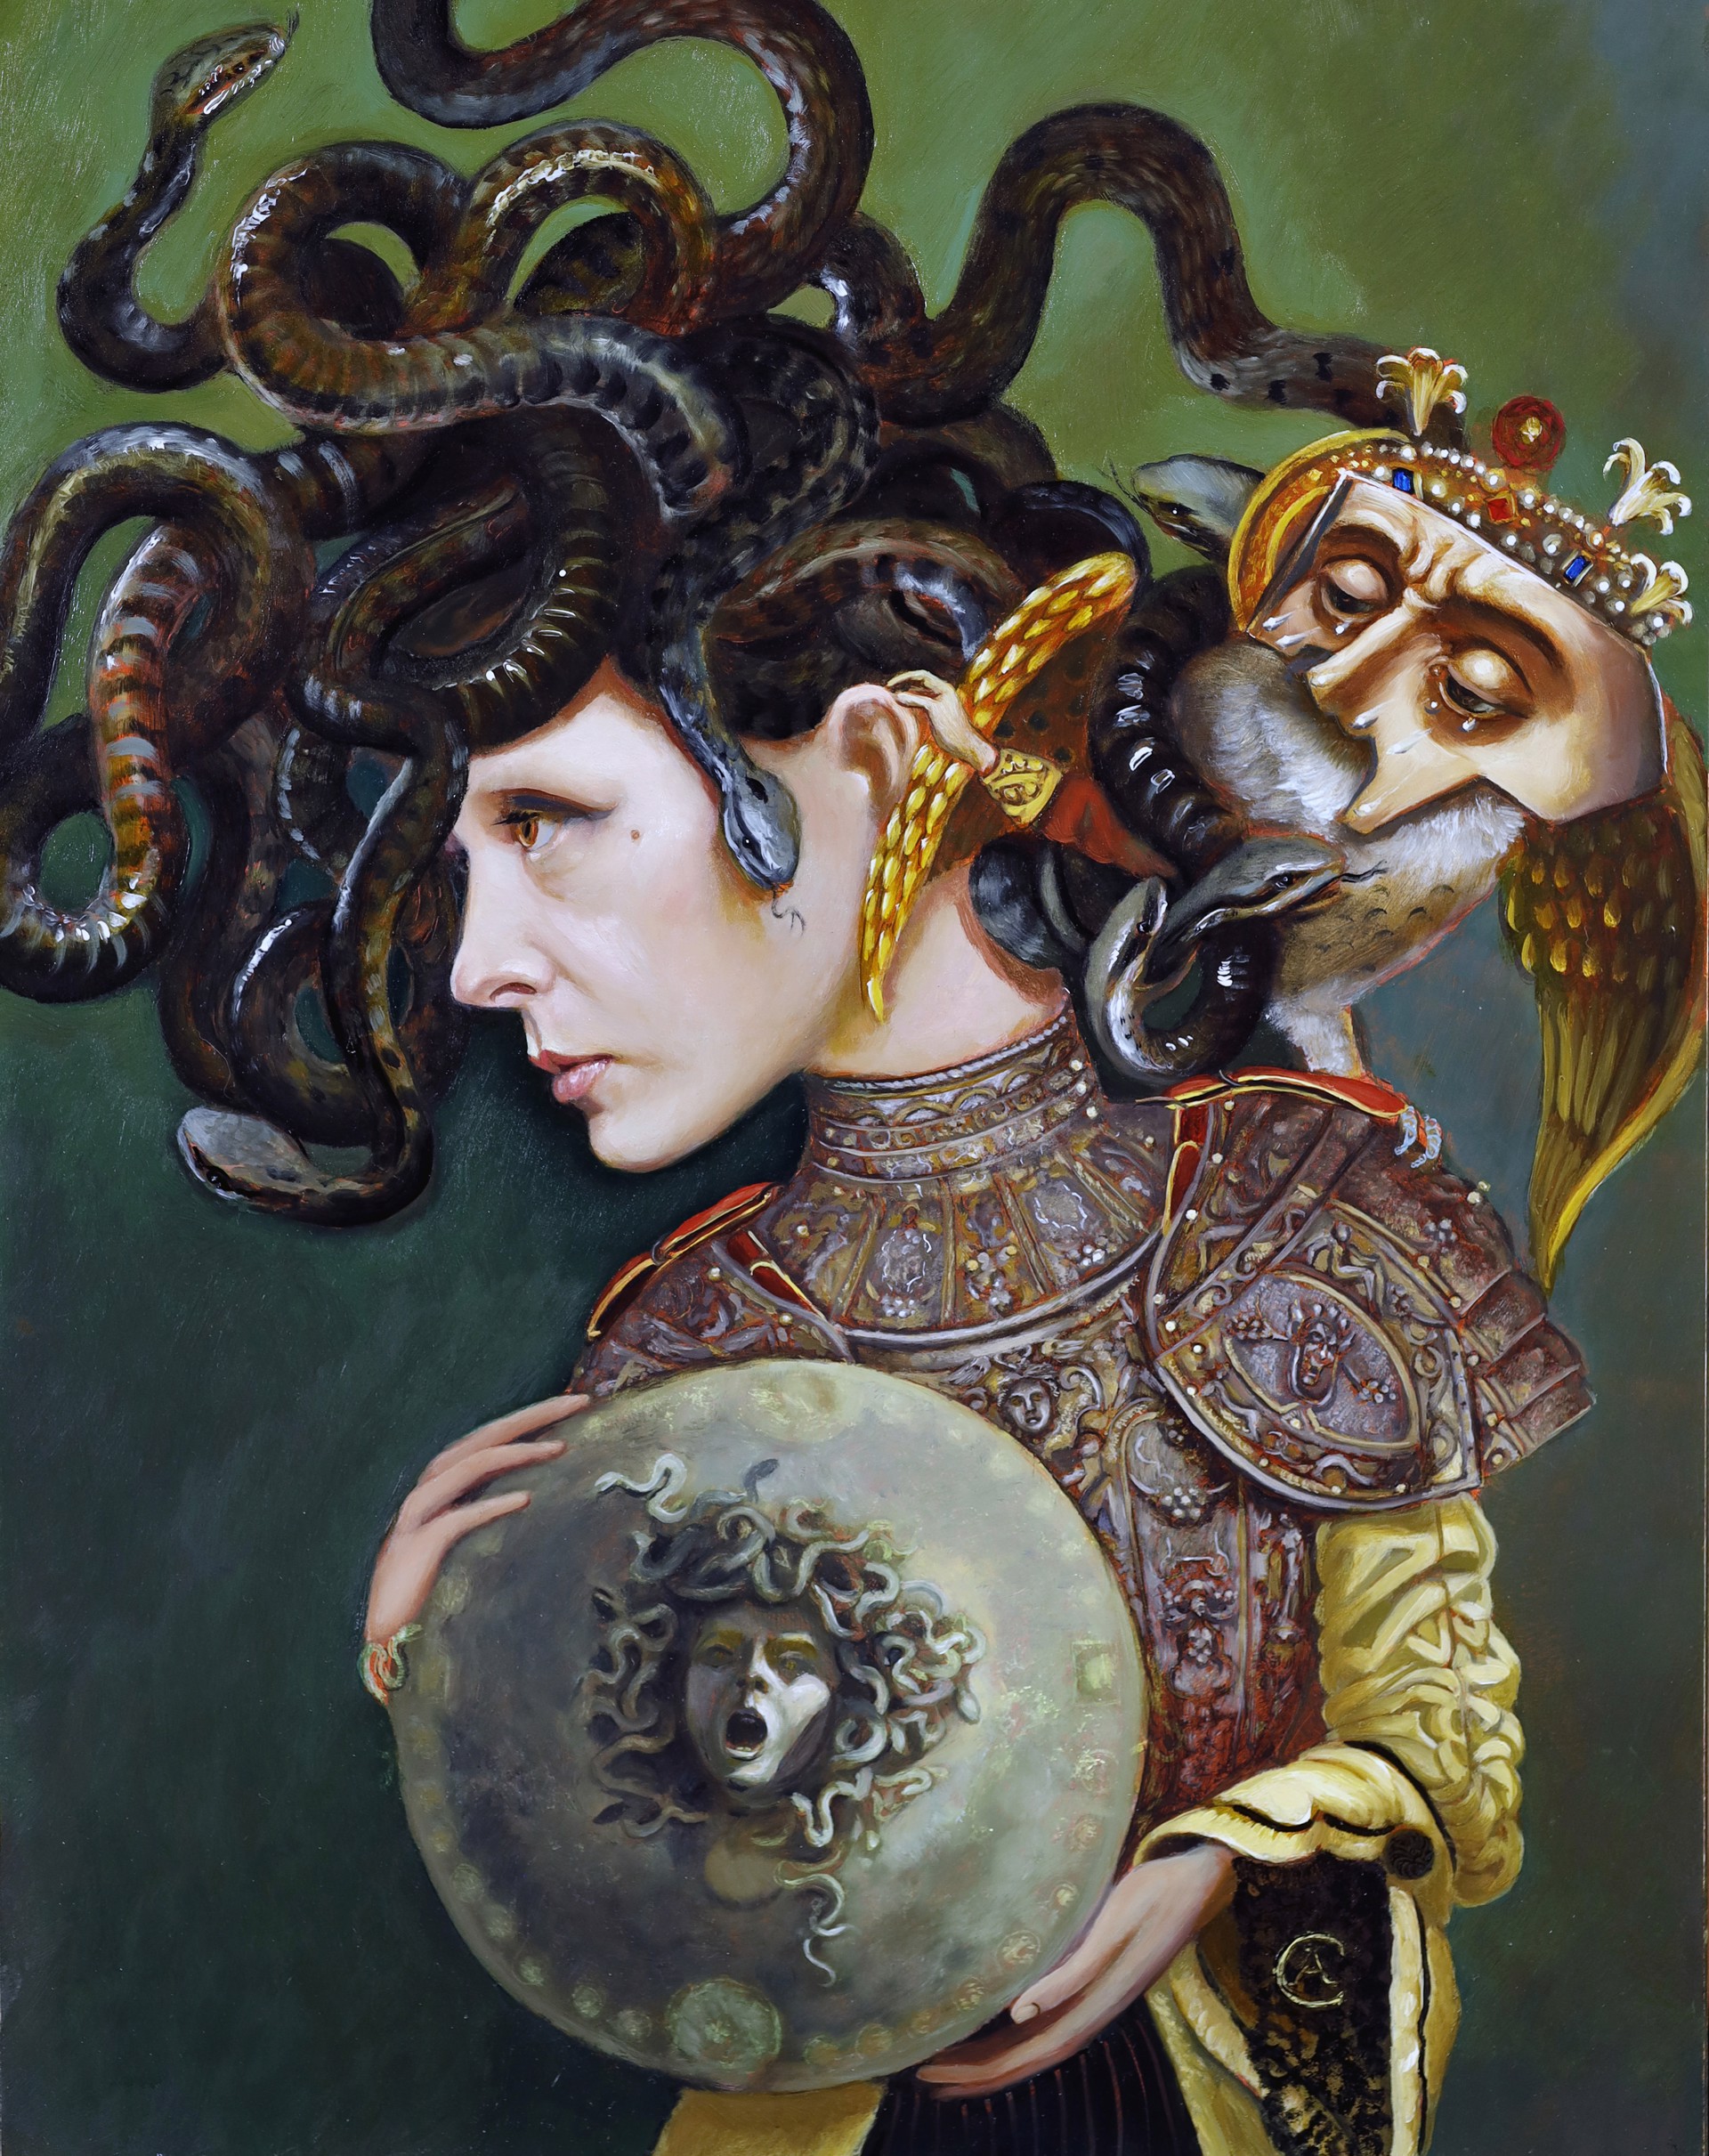 Self-Portrait as Medusa as Athena by Carrie Ann Baade